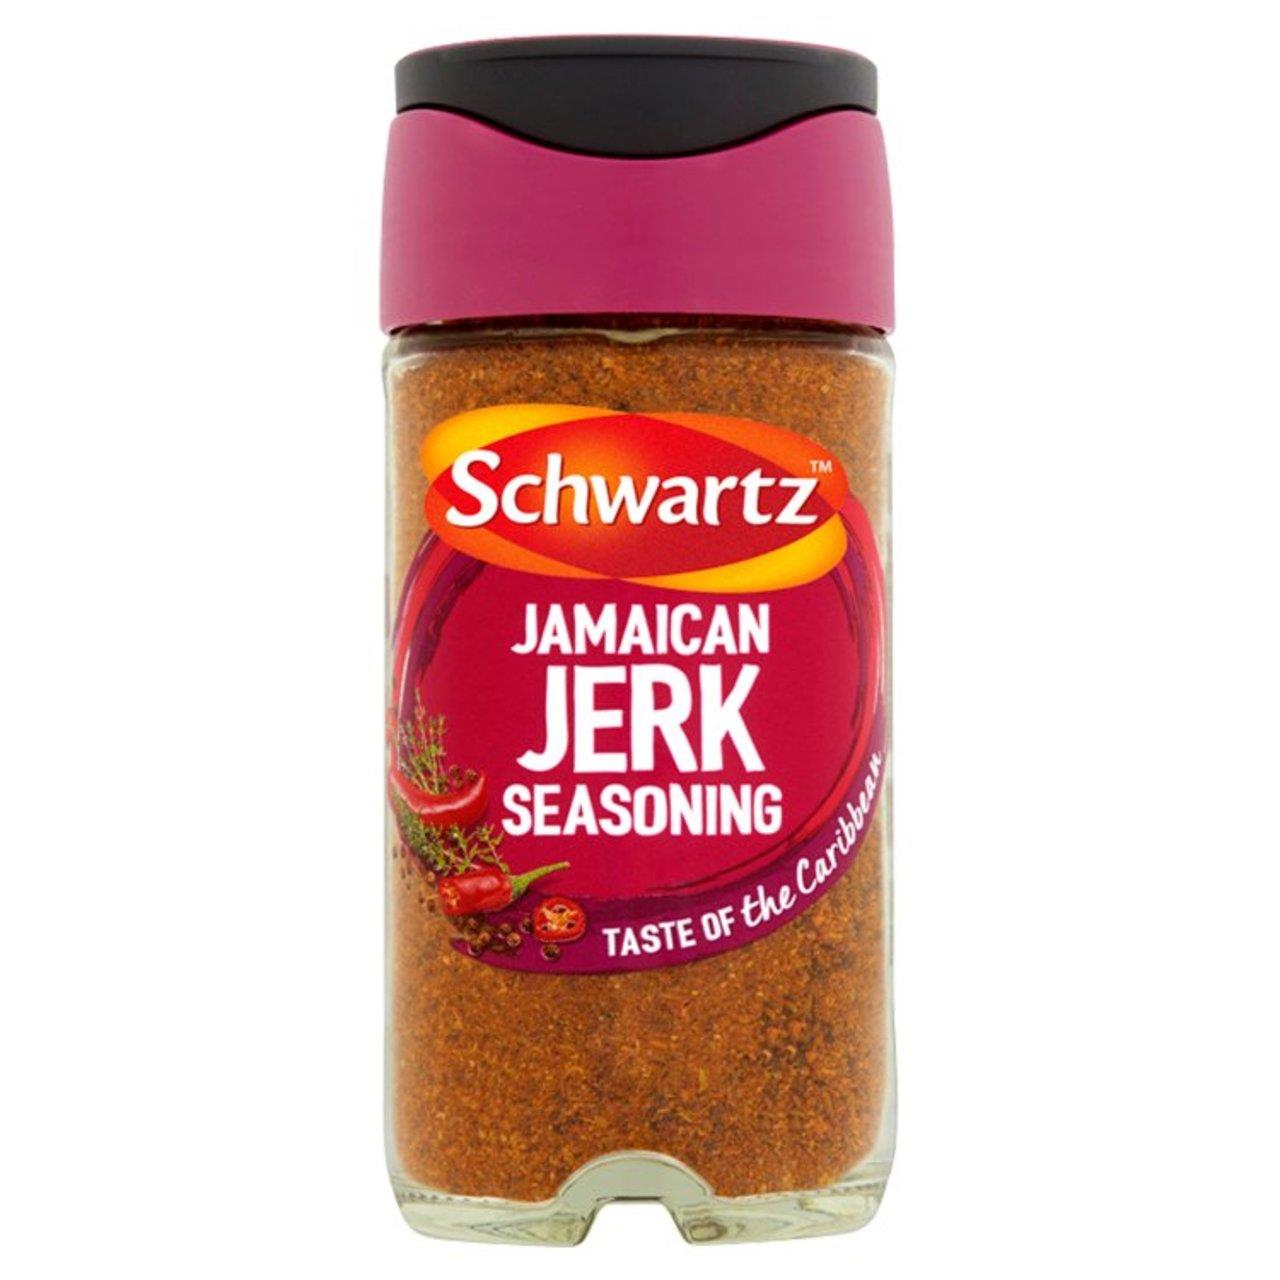 Schwartz Jamaican Jerk Seasoning Jar 51g